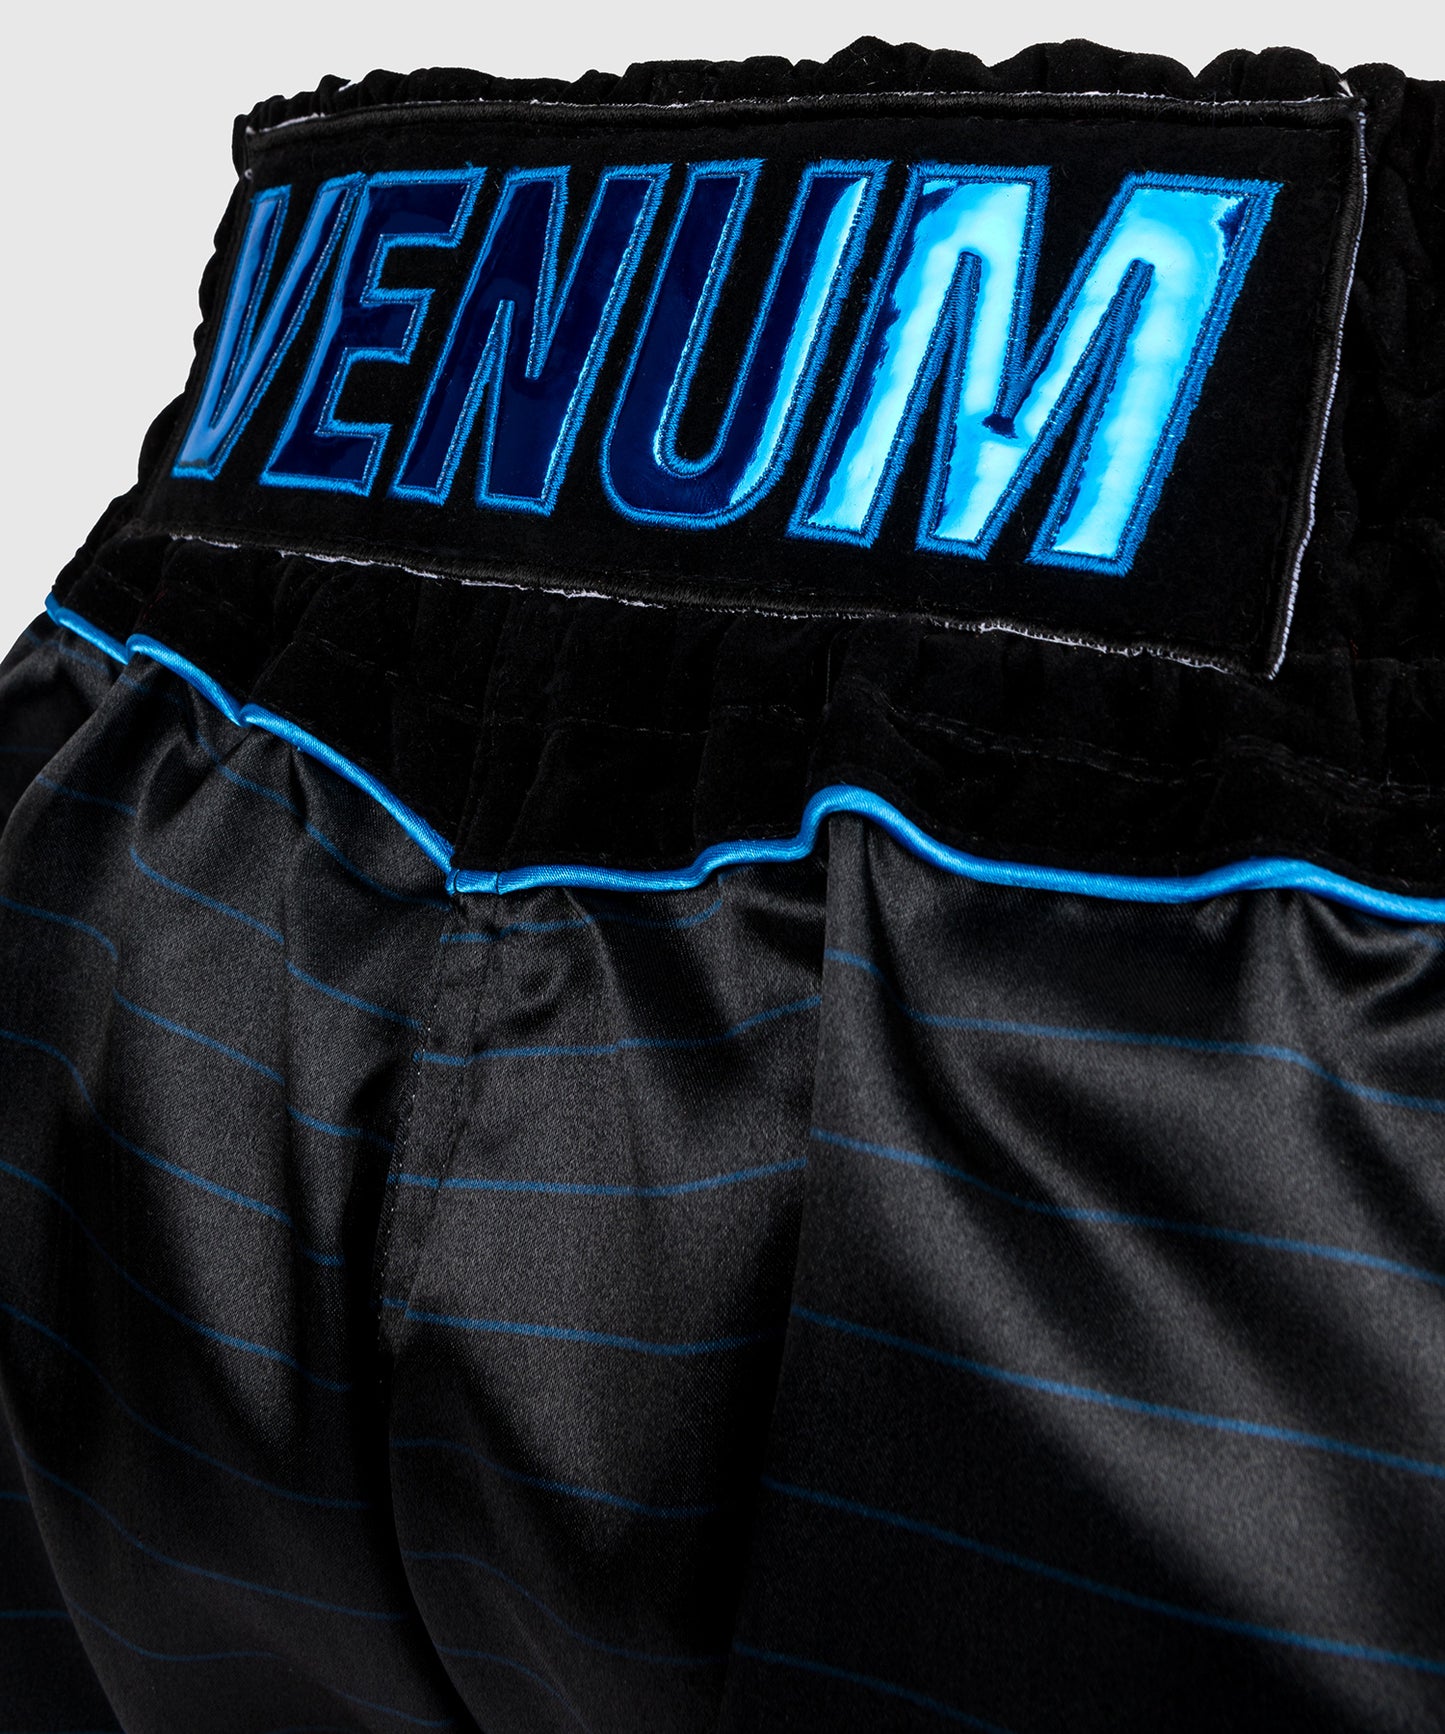 Venum Attack Pantalones cortos de Muay Thai - Negro/Azul